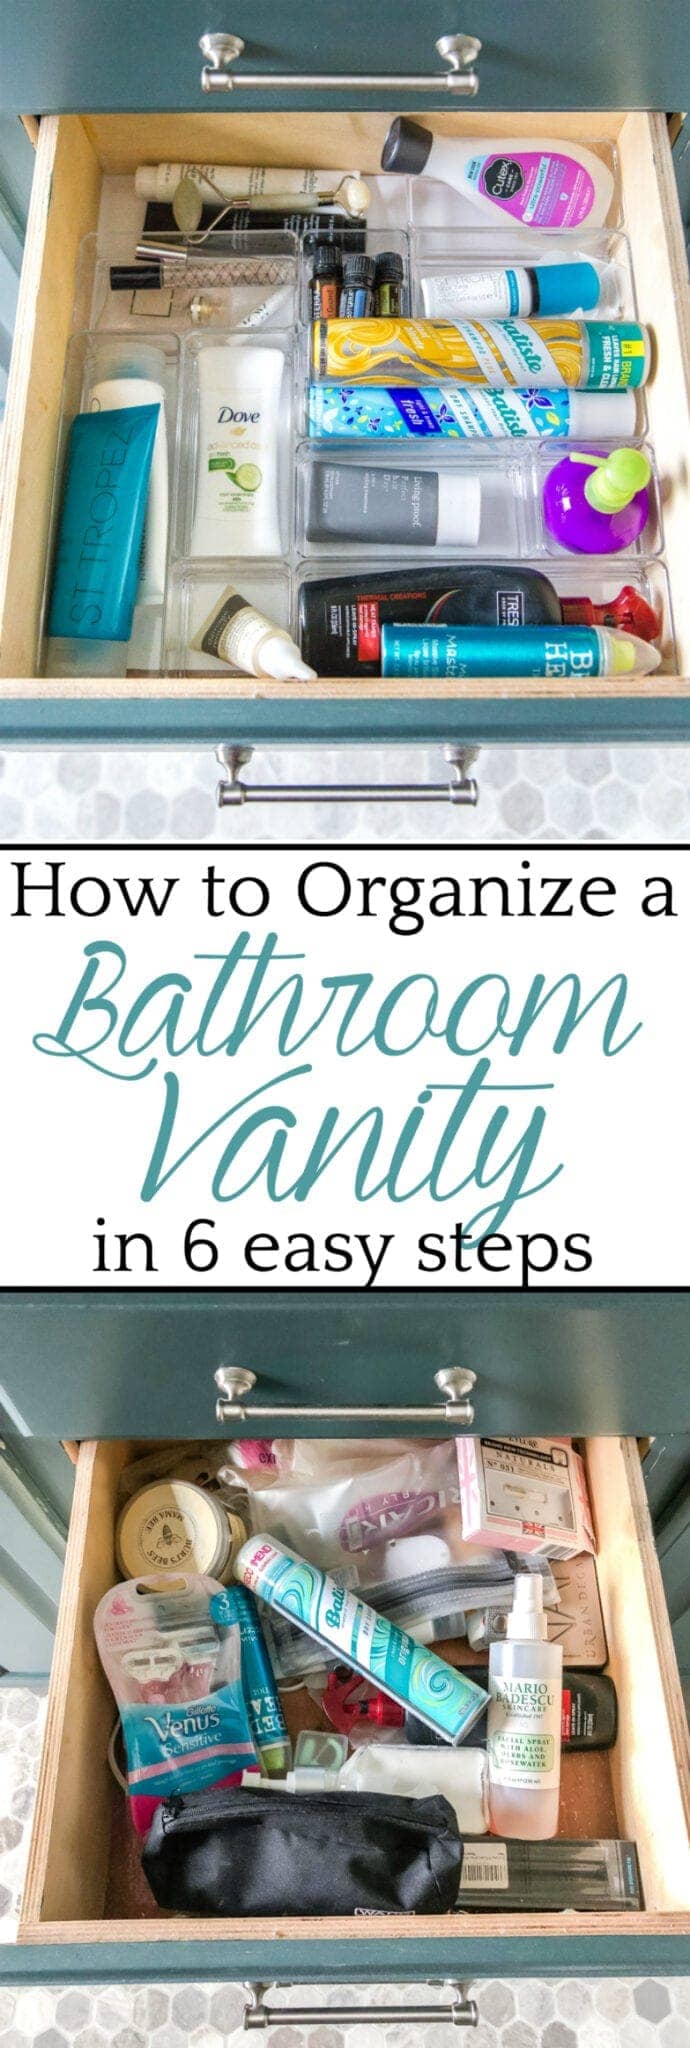 How to organize a bathroom vanity